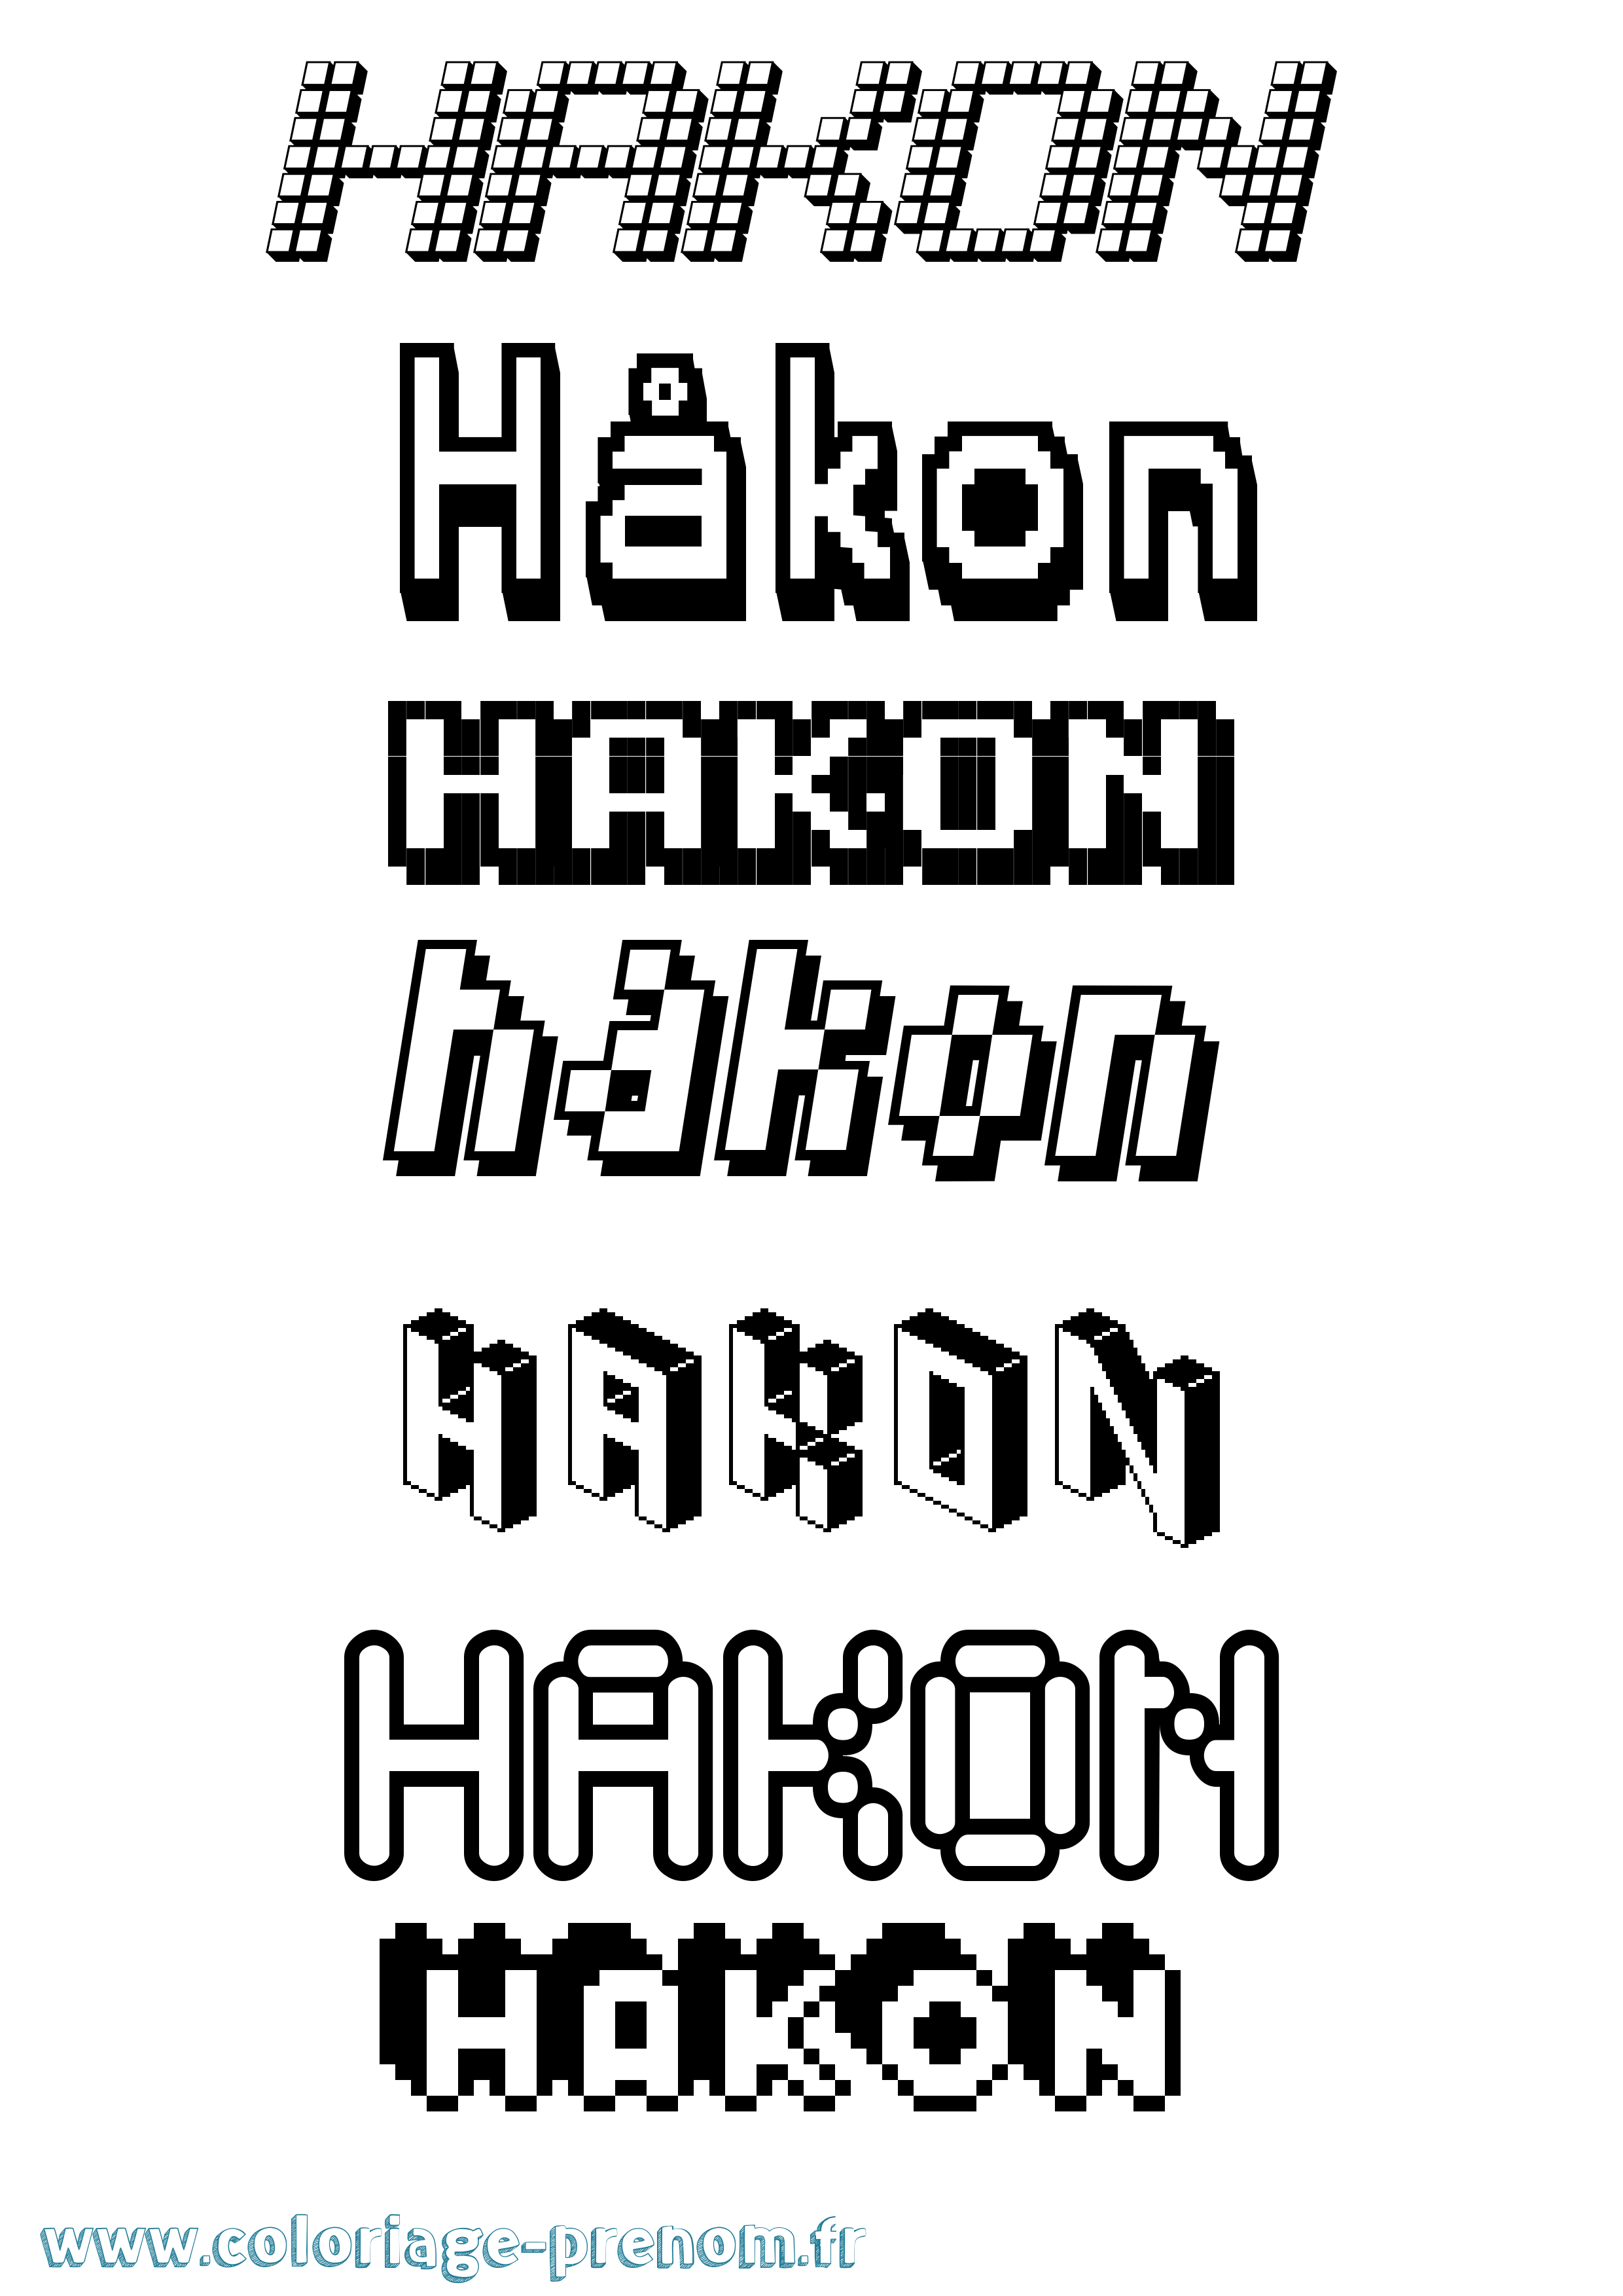 Coloriage prénom Håkon Pixel